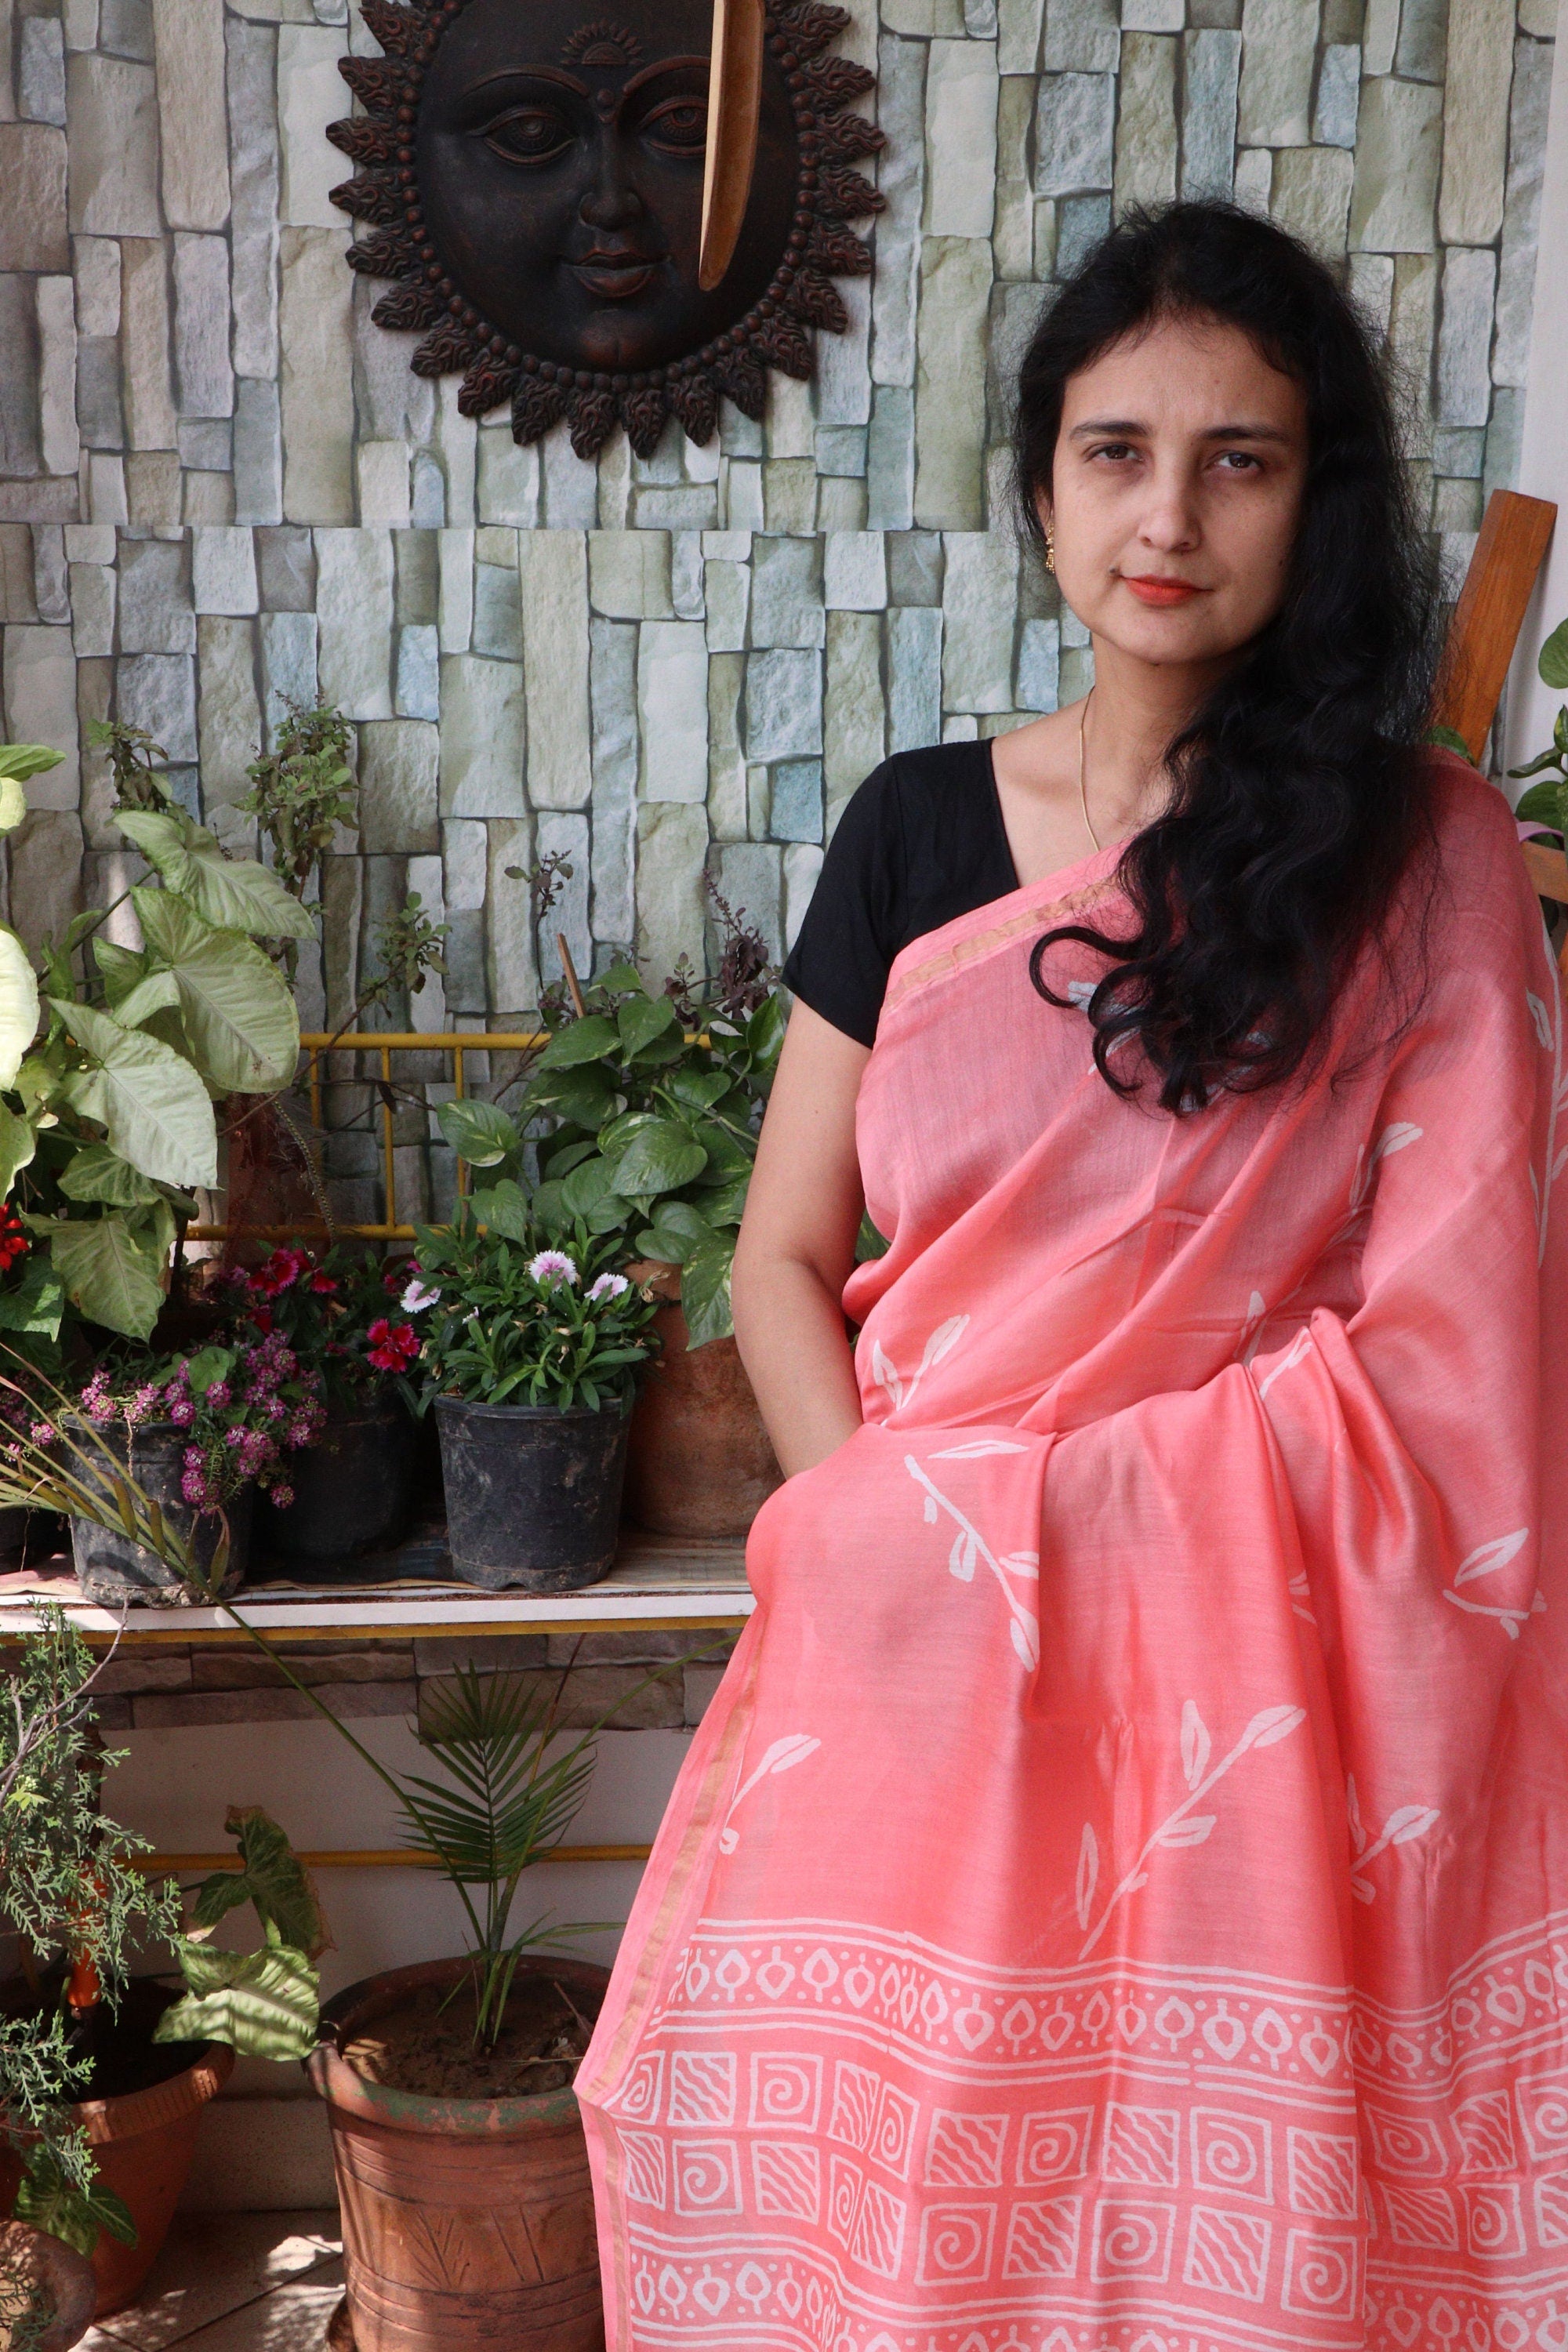 Saree - Chanderi Silk Cotton - Handblock Printed - Melon - Sari/Indian Dress/Fabric Yard